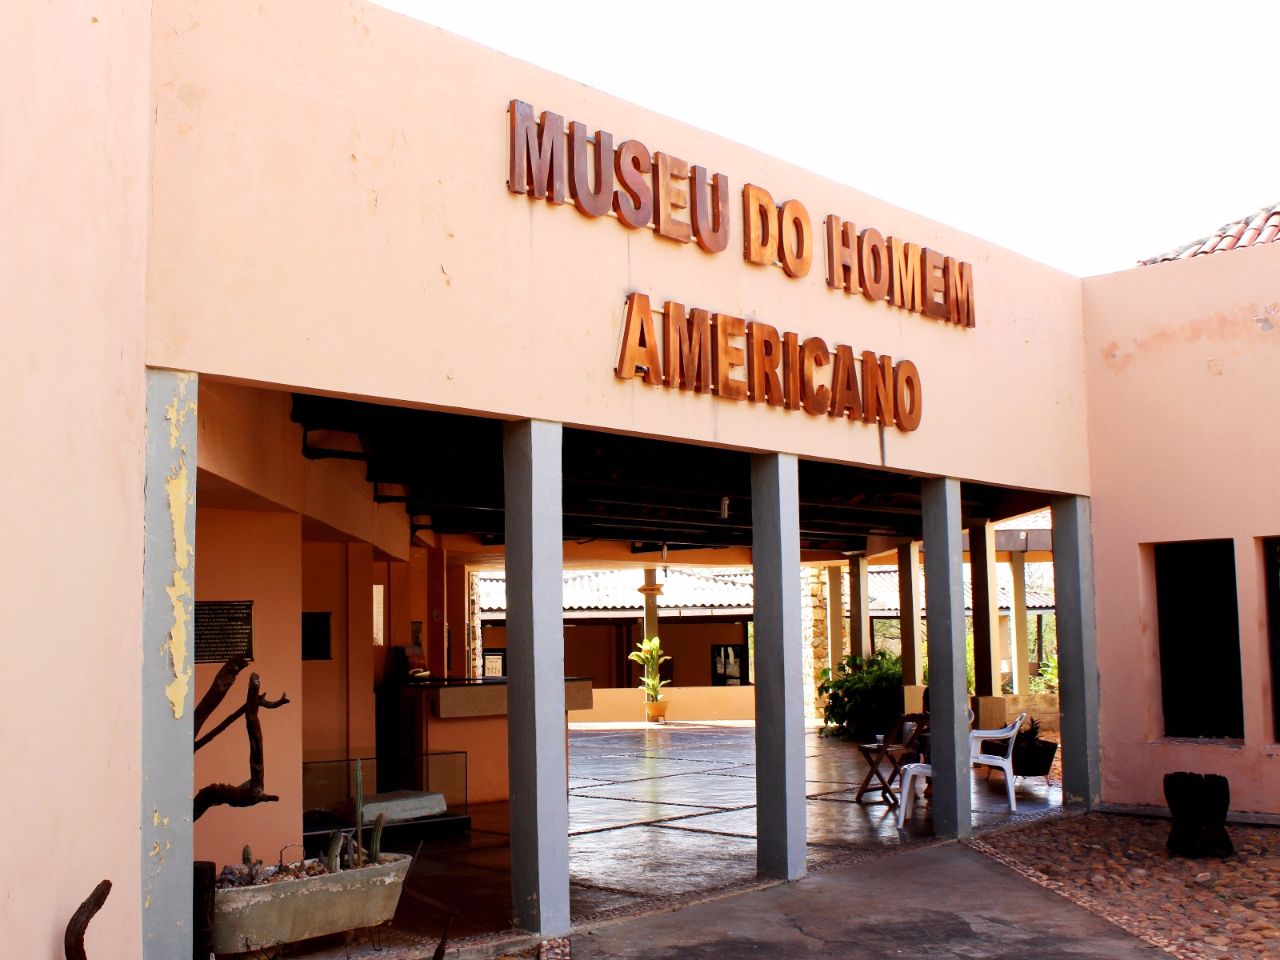 Археологический музей нацпарка Серра-да-Капивара Сан-Раймунду-Нонату, Бразилия